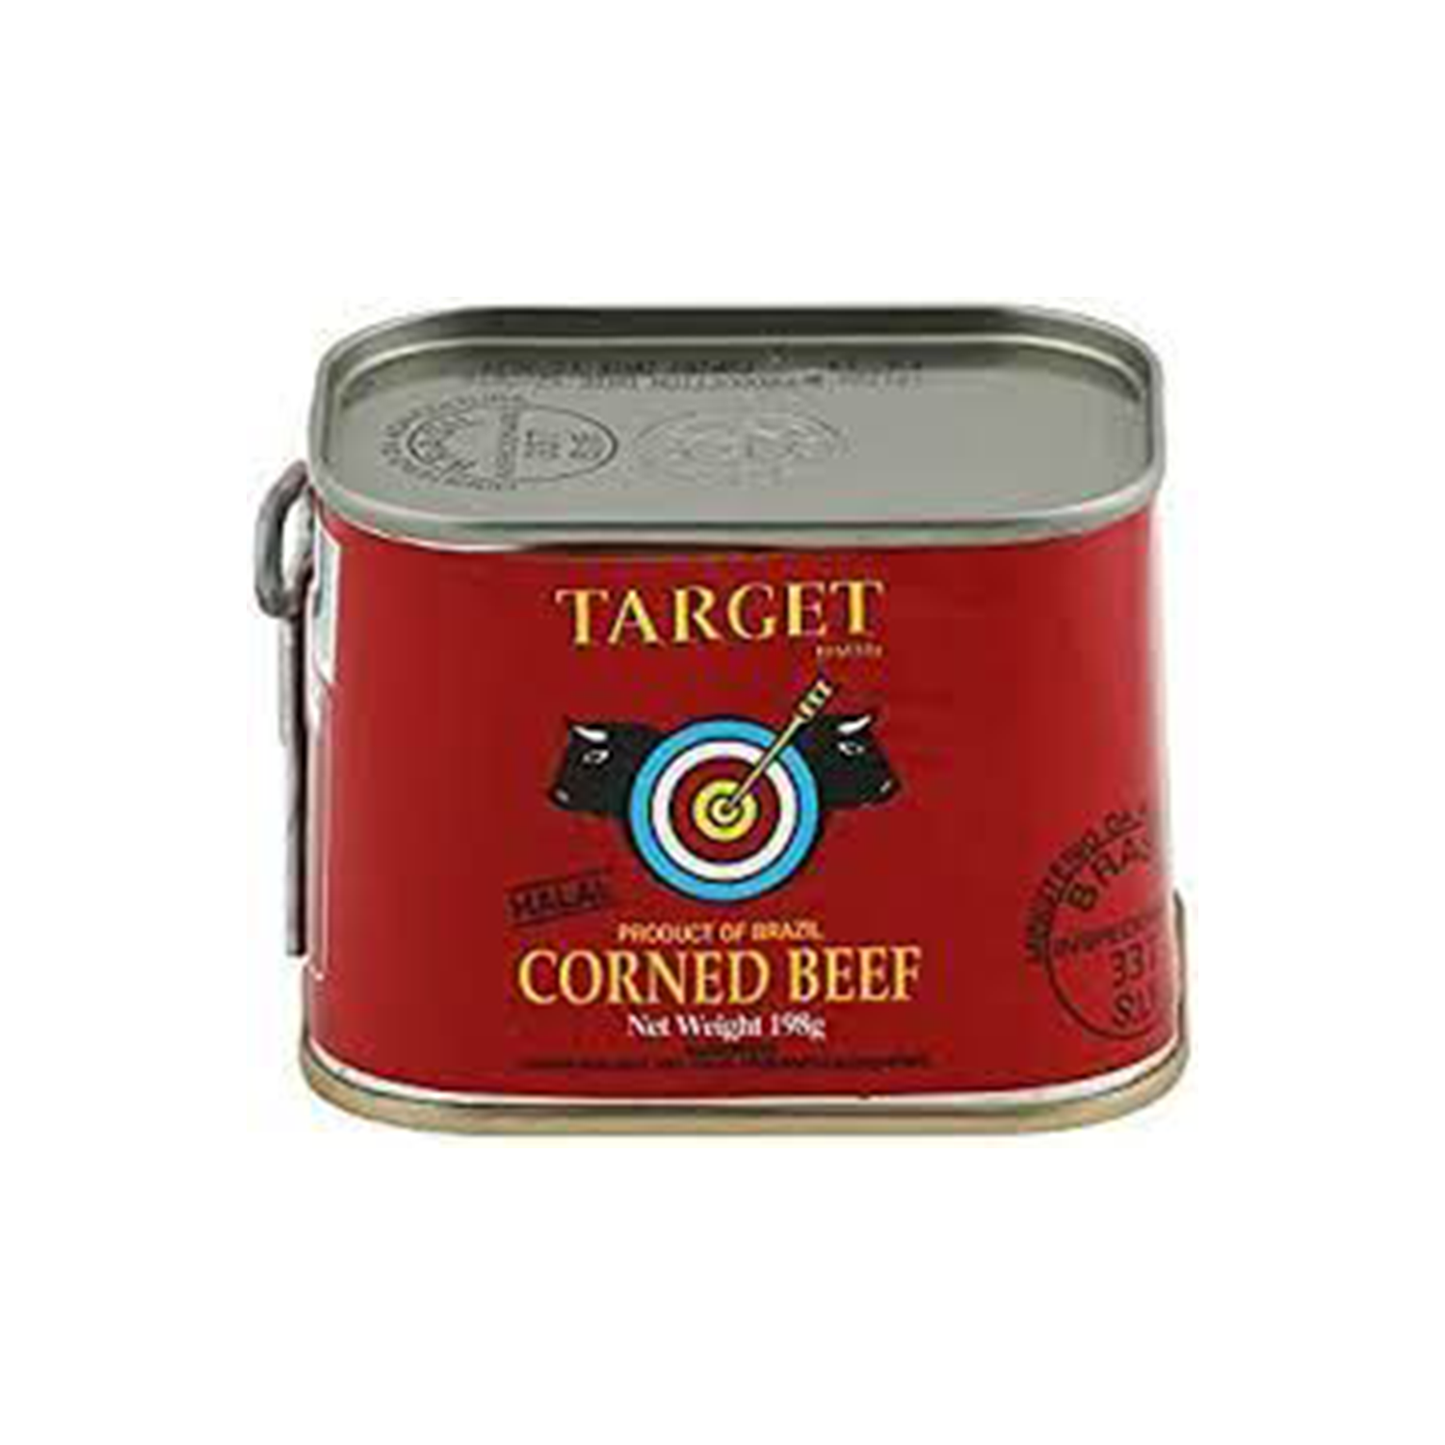 Target Corned Beef 198G